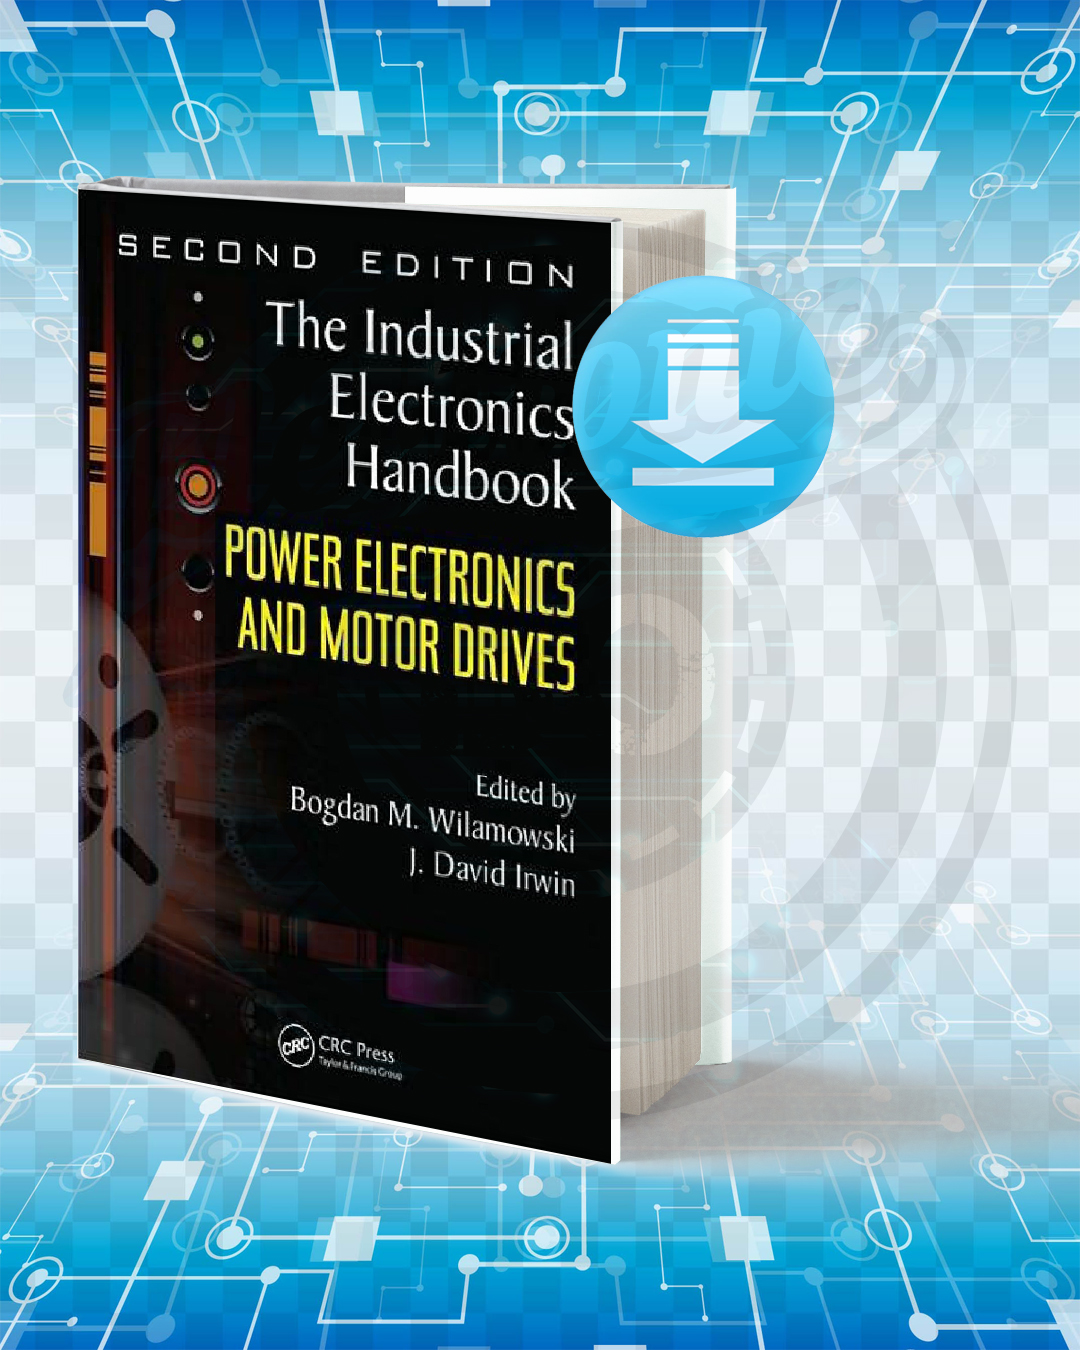 power electronics book pdf